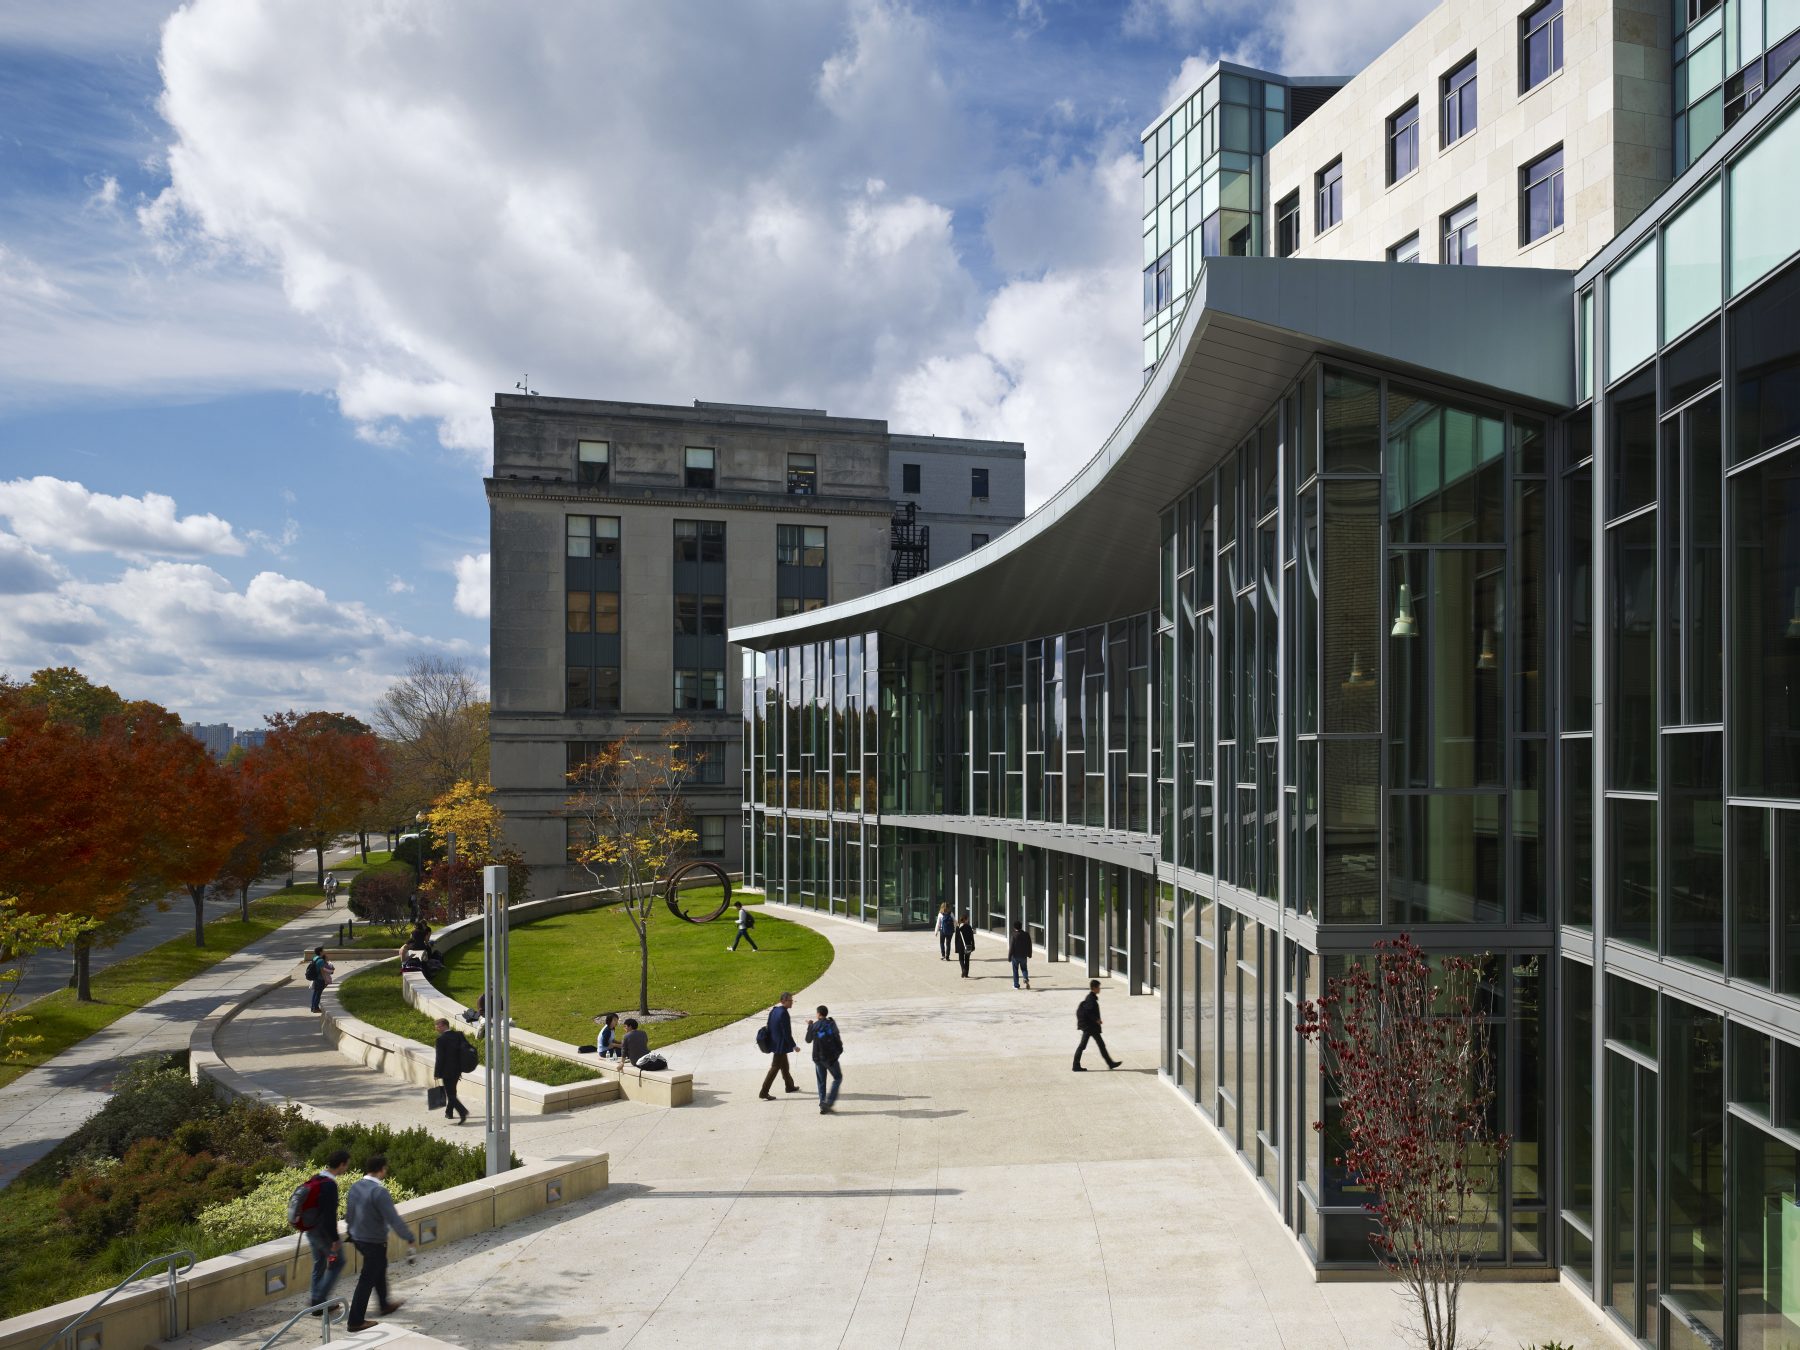 MIT Sloan School of Management Exterior, seen from walking down ramp